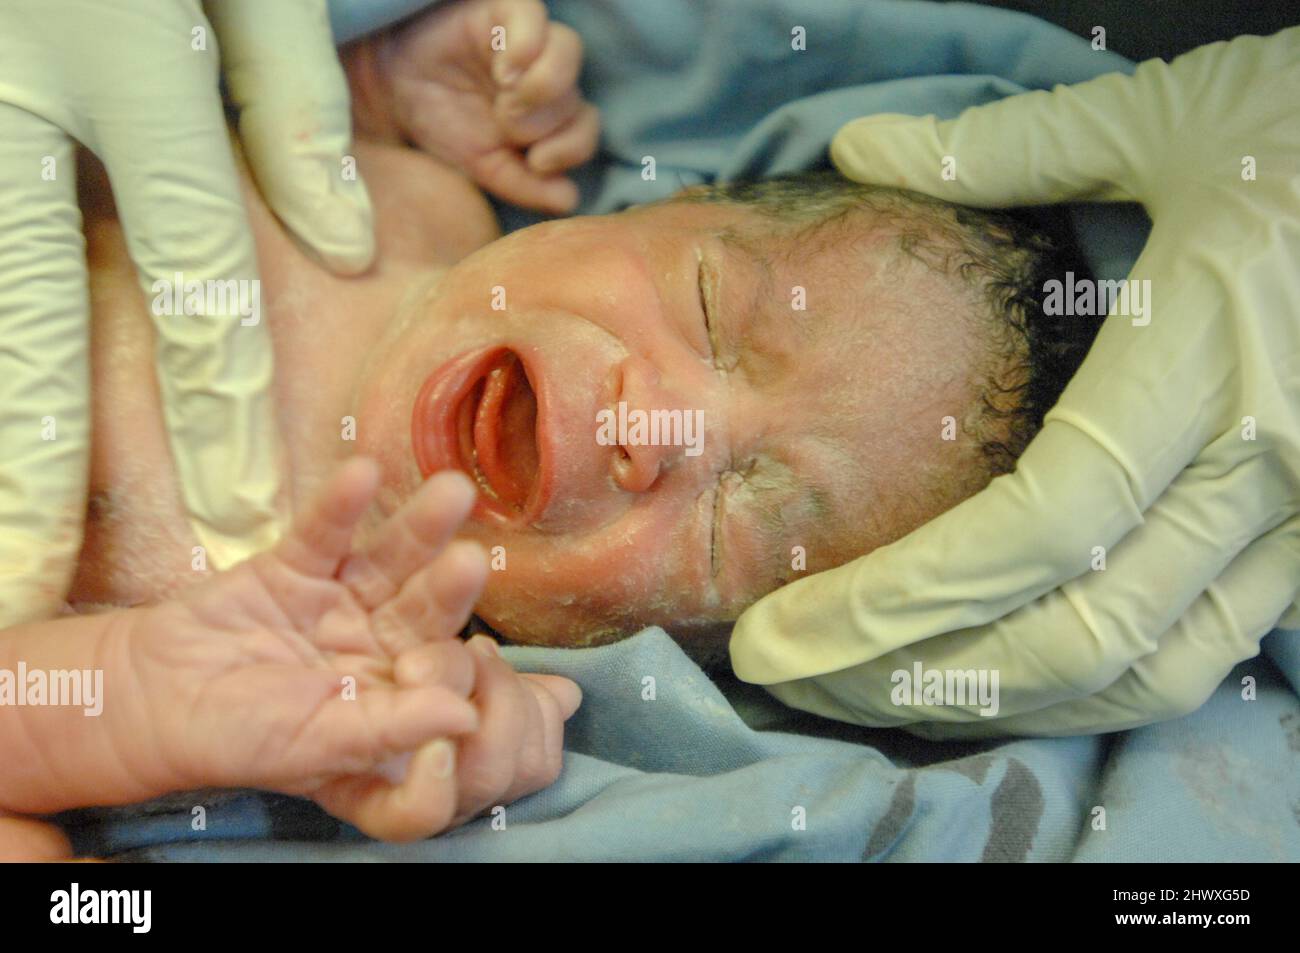 Paediatrition examines a newborn baby Stock Photo